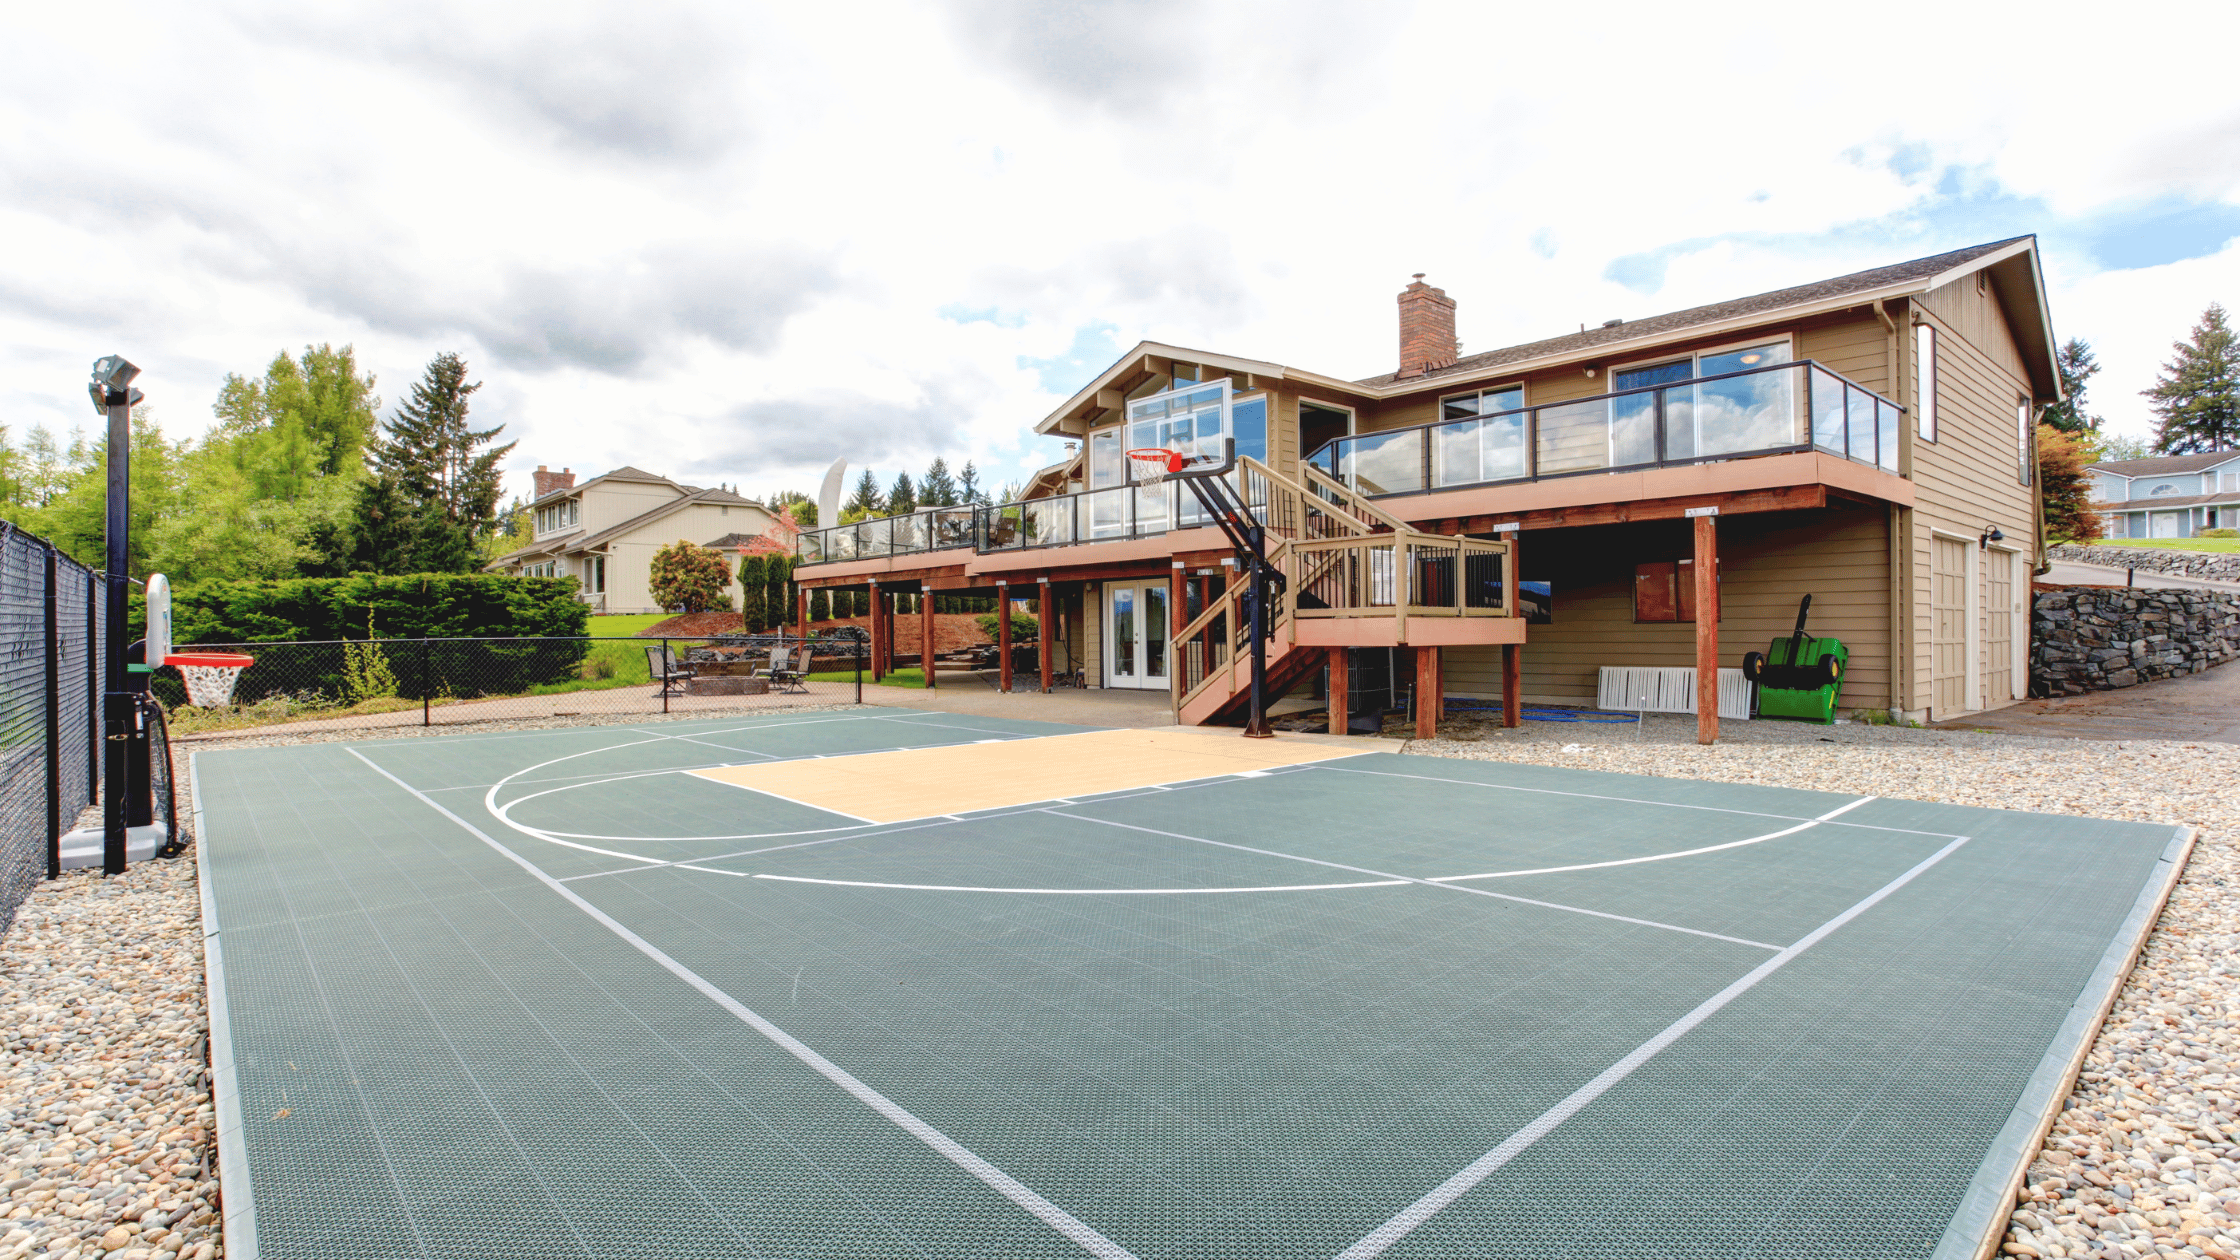 Custom Basketball Court in a large backyard.